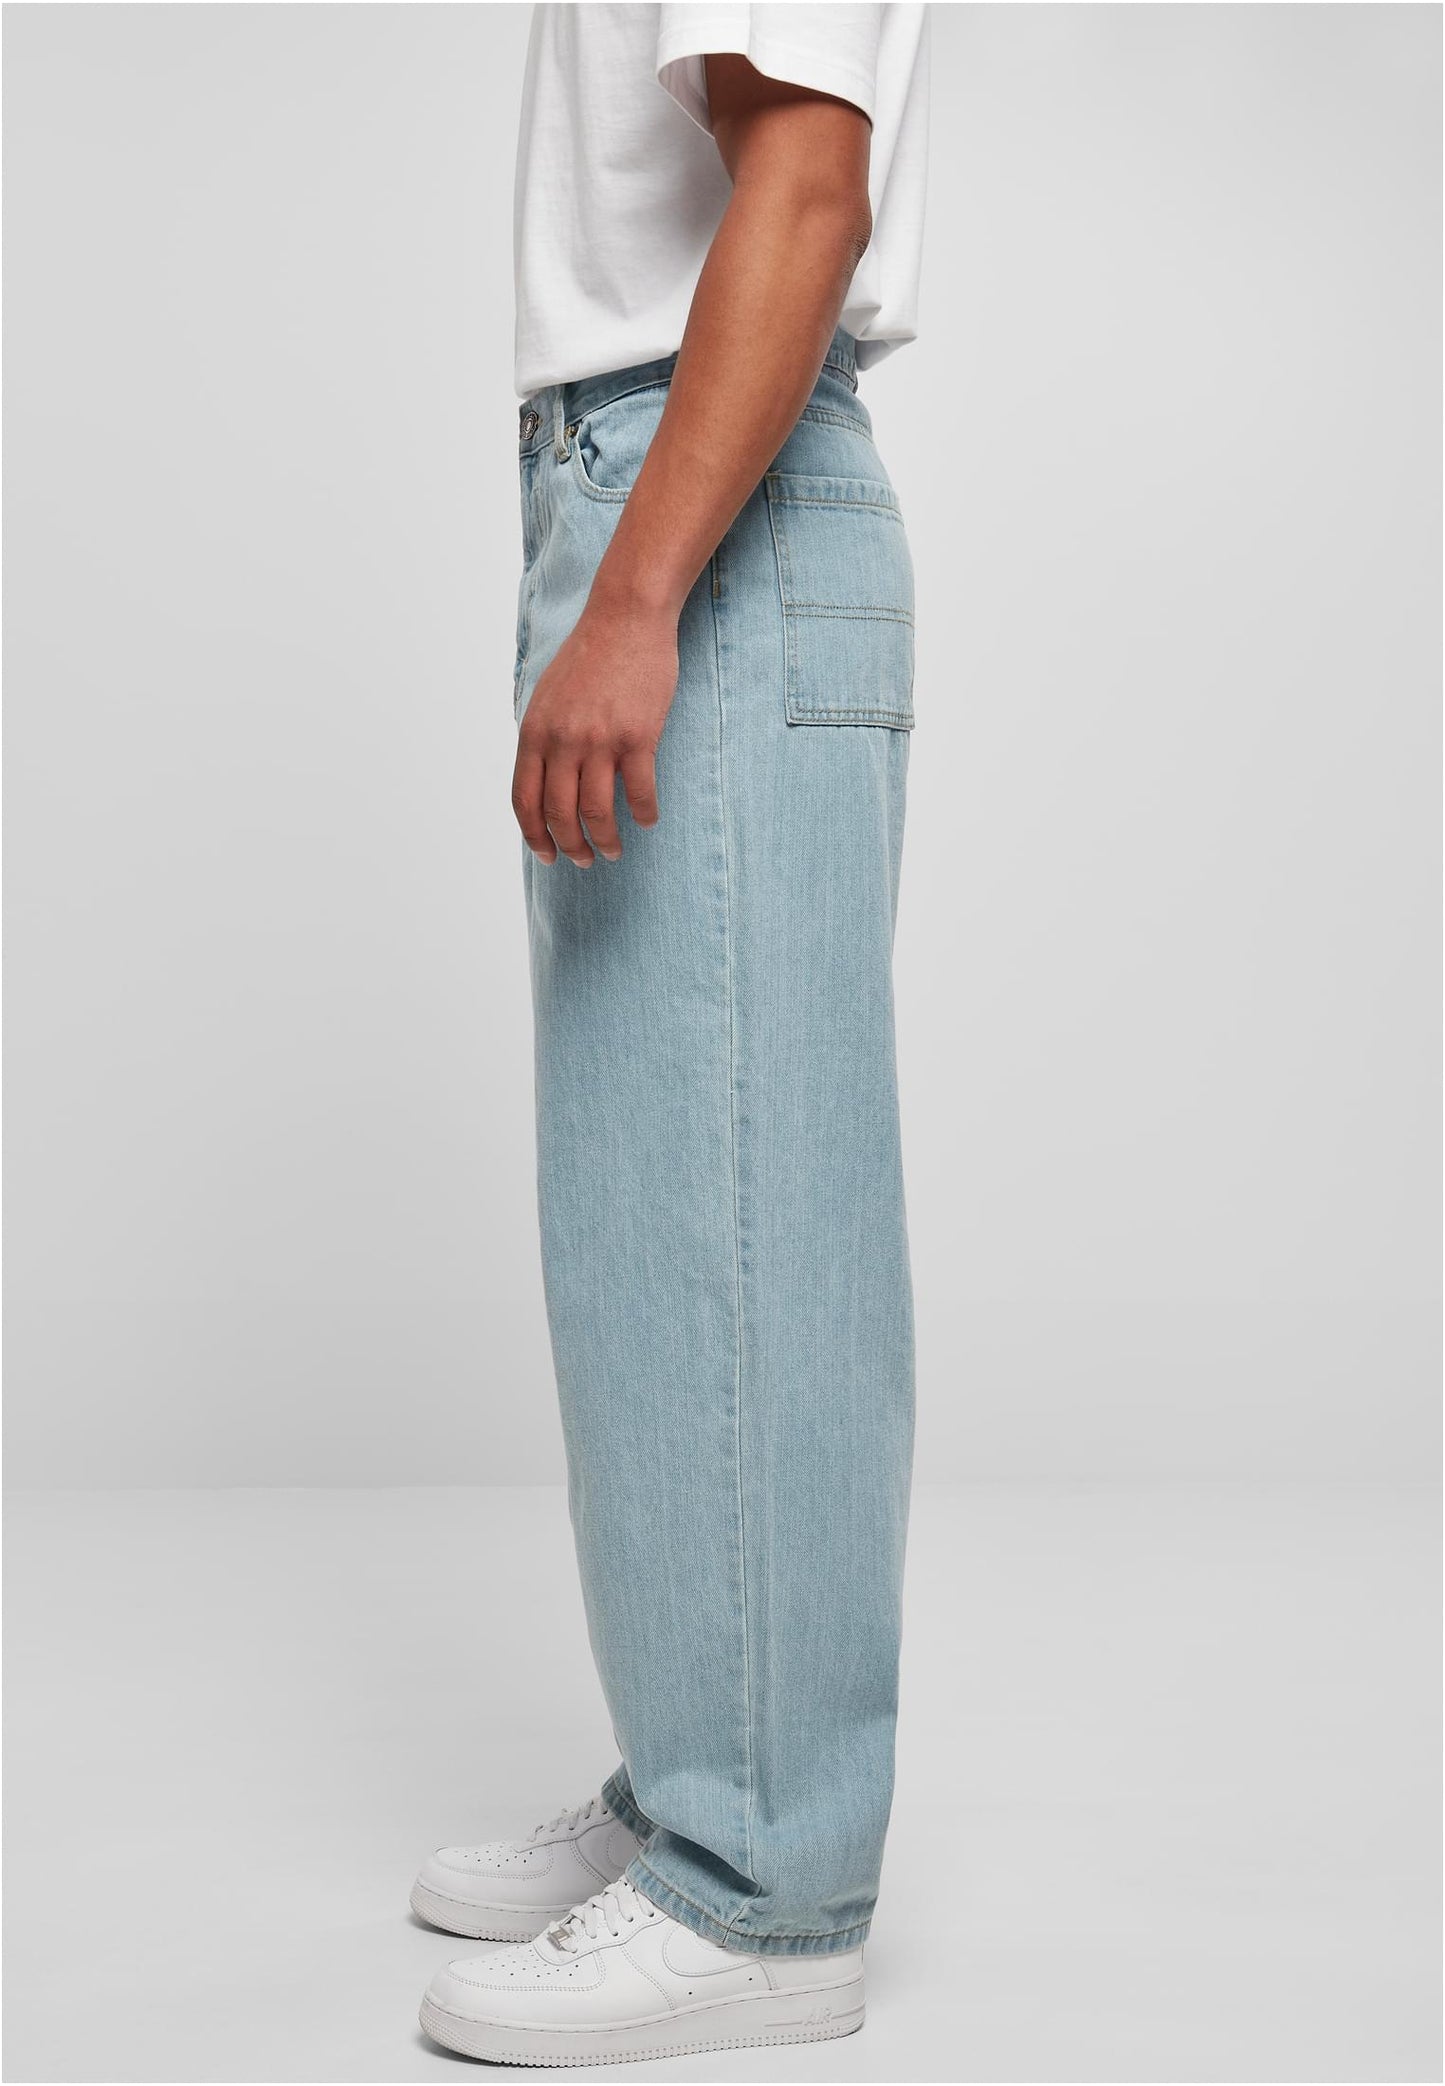 90's Jeans, Lighter Washed